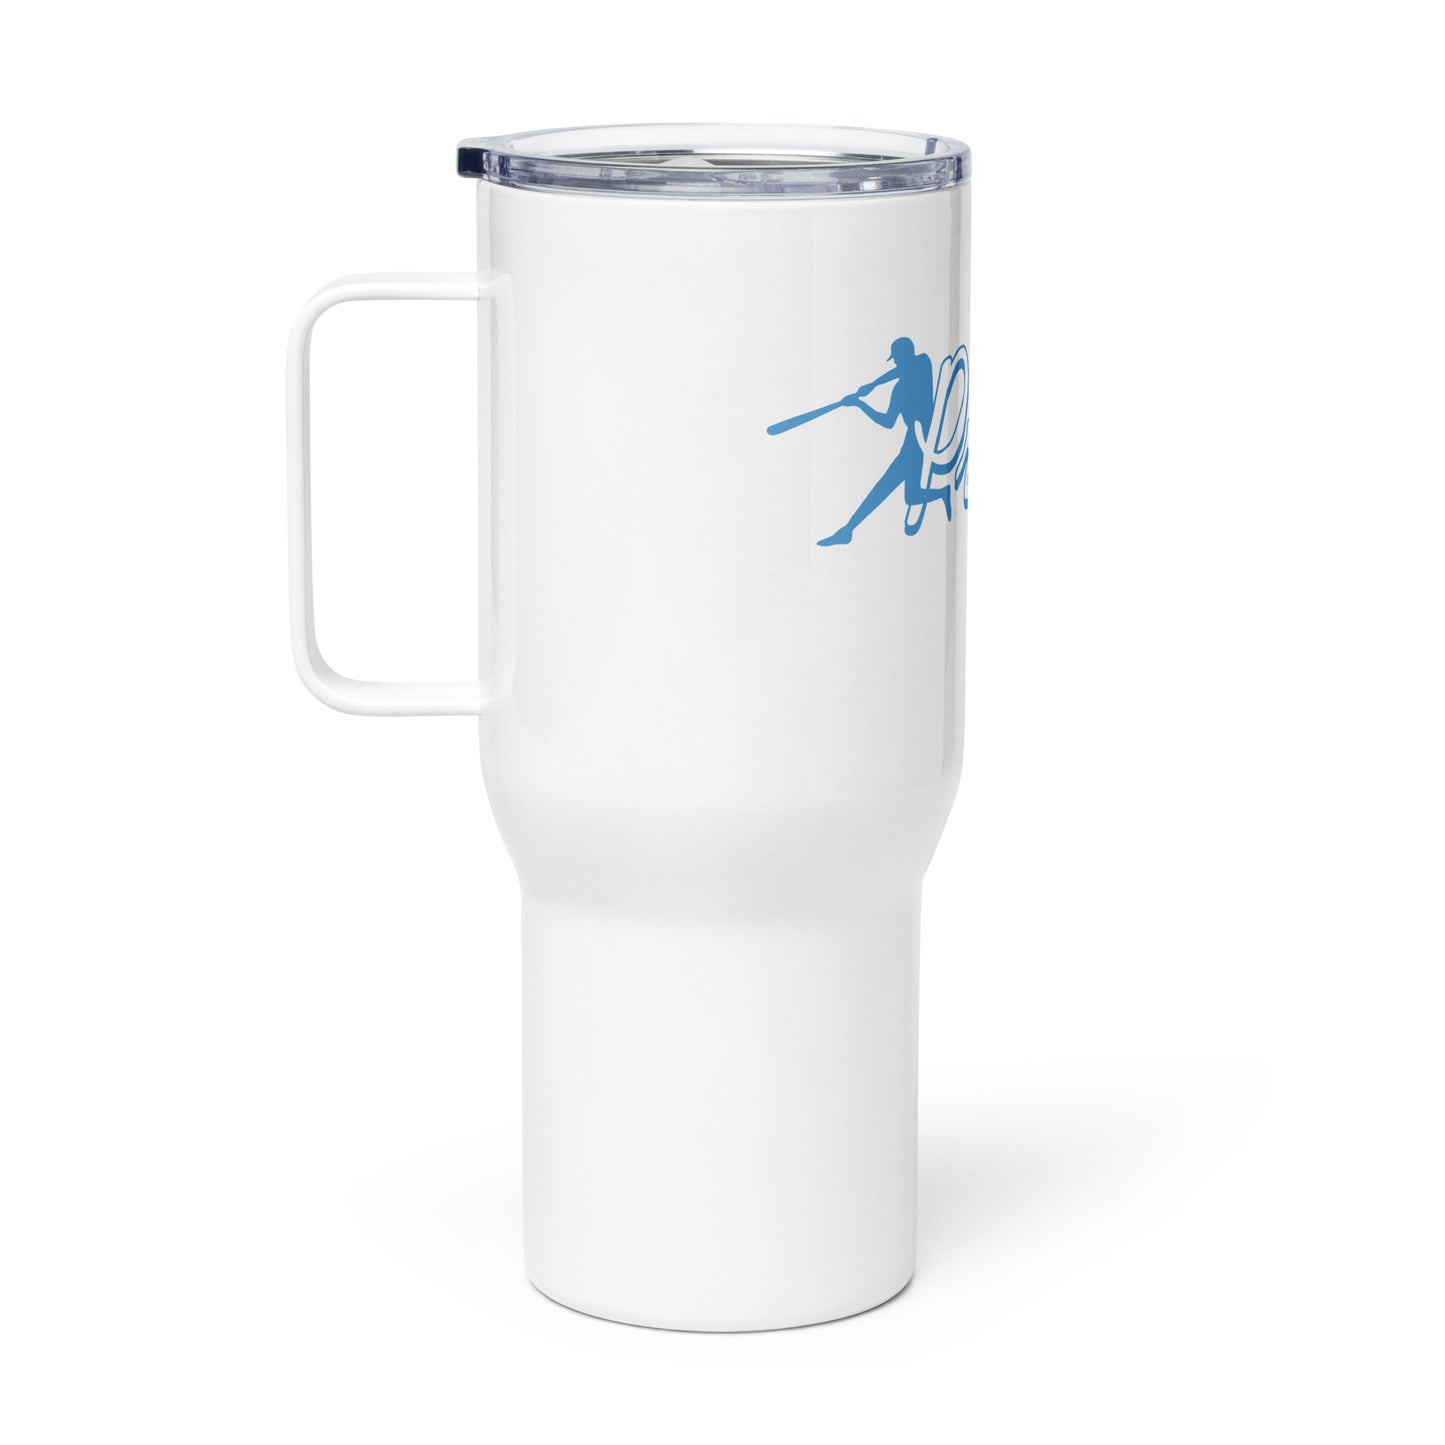 GBC Prospects Travel mug with a handle